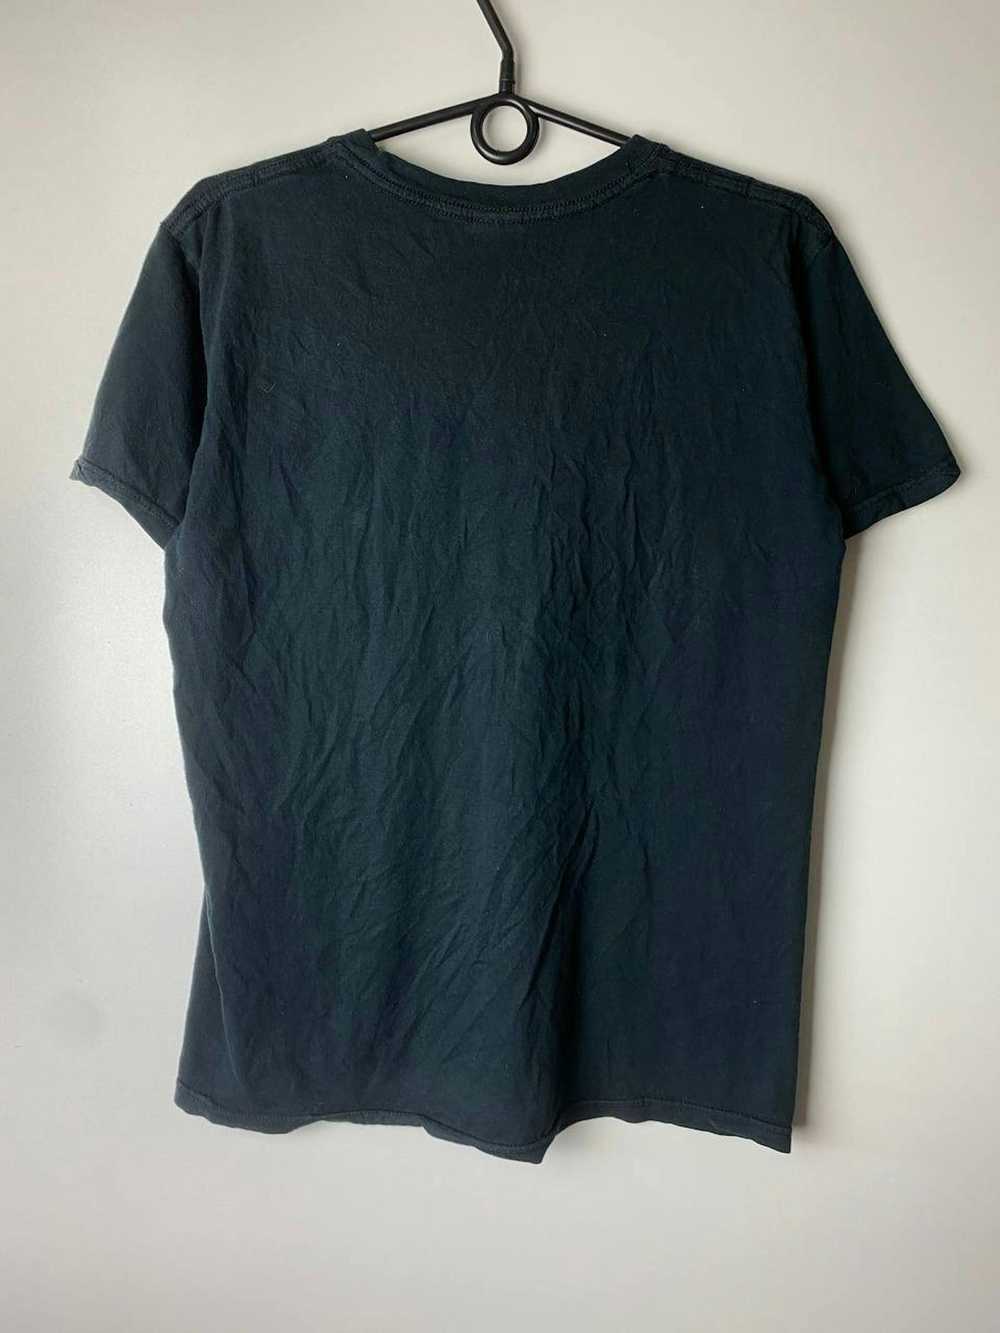 Vintage Suicide Silence vintage t-shirt size M - image 2